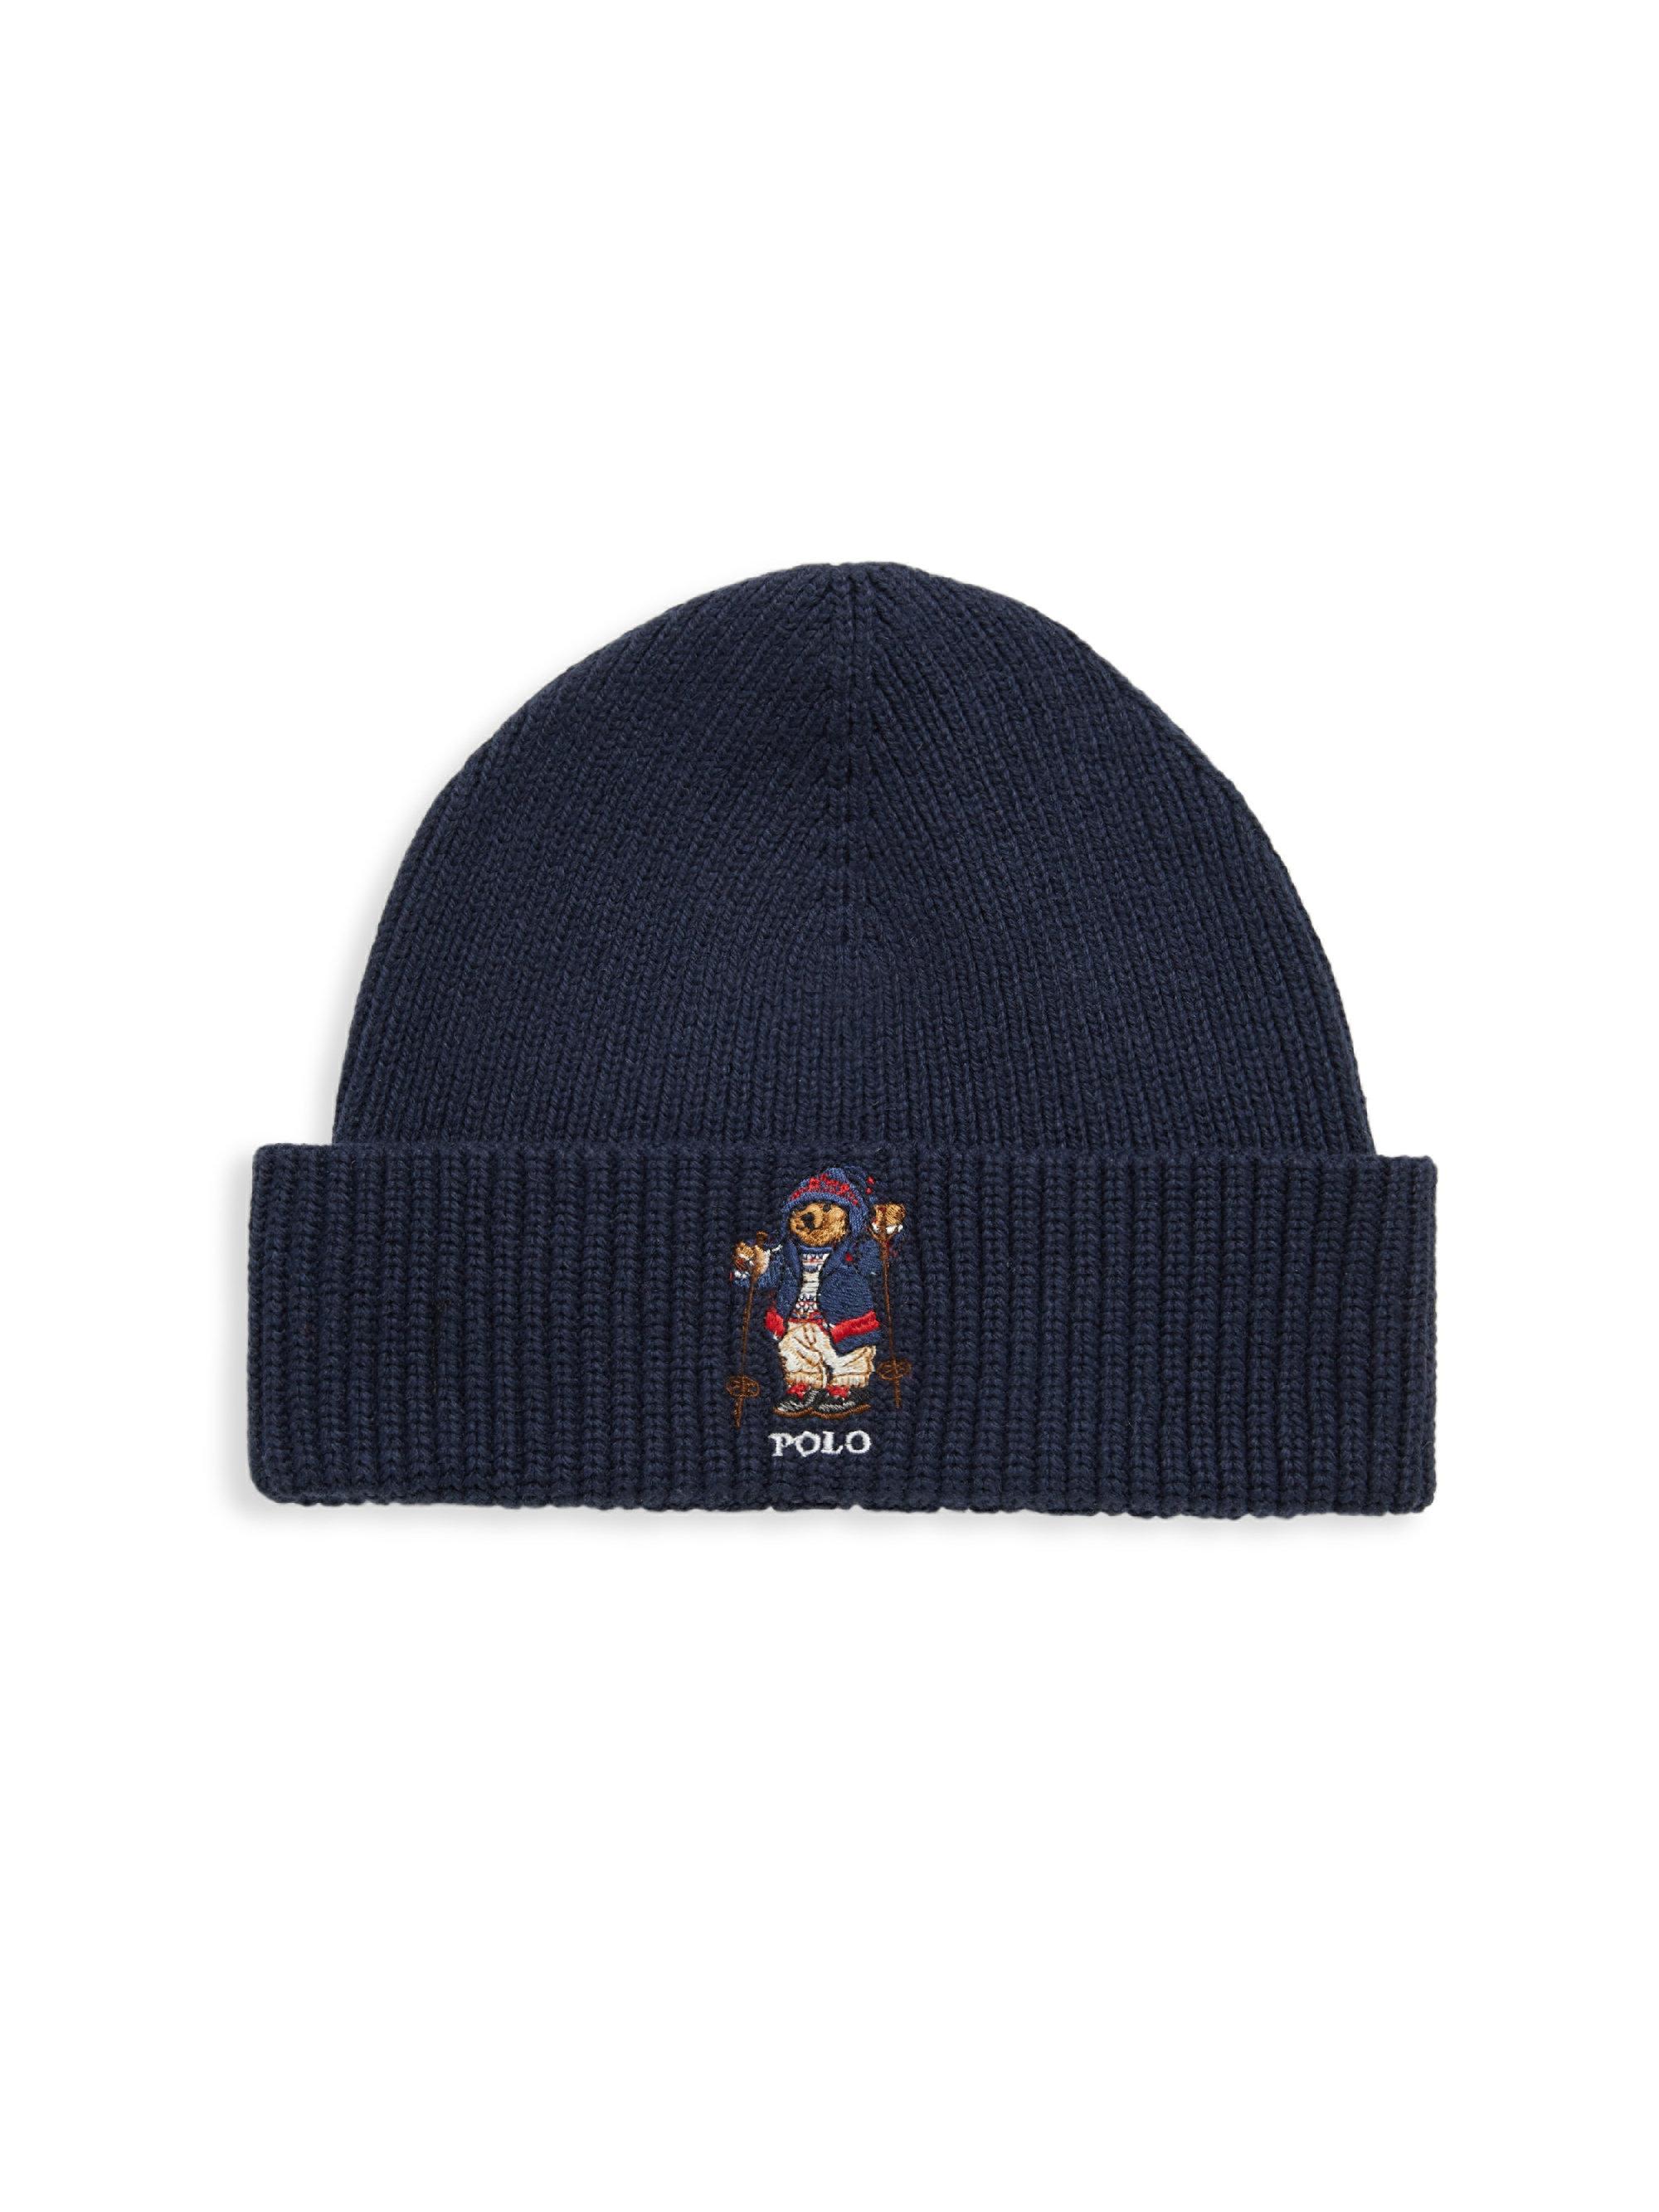 Polo Ralph Lauren Cotton Apres Ski Bear Hat in Blue for Men - Lyst